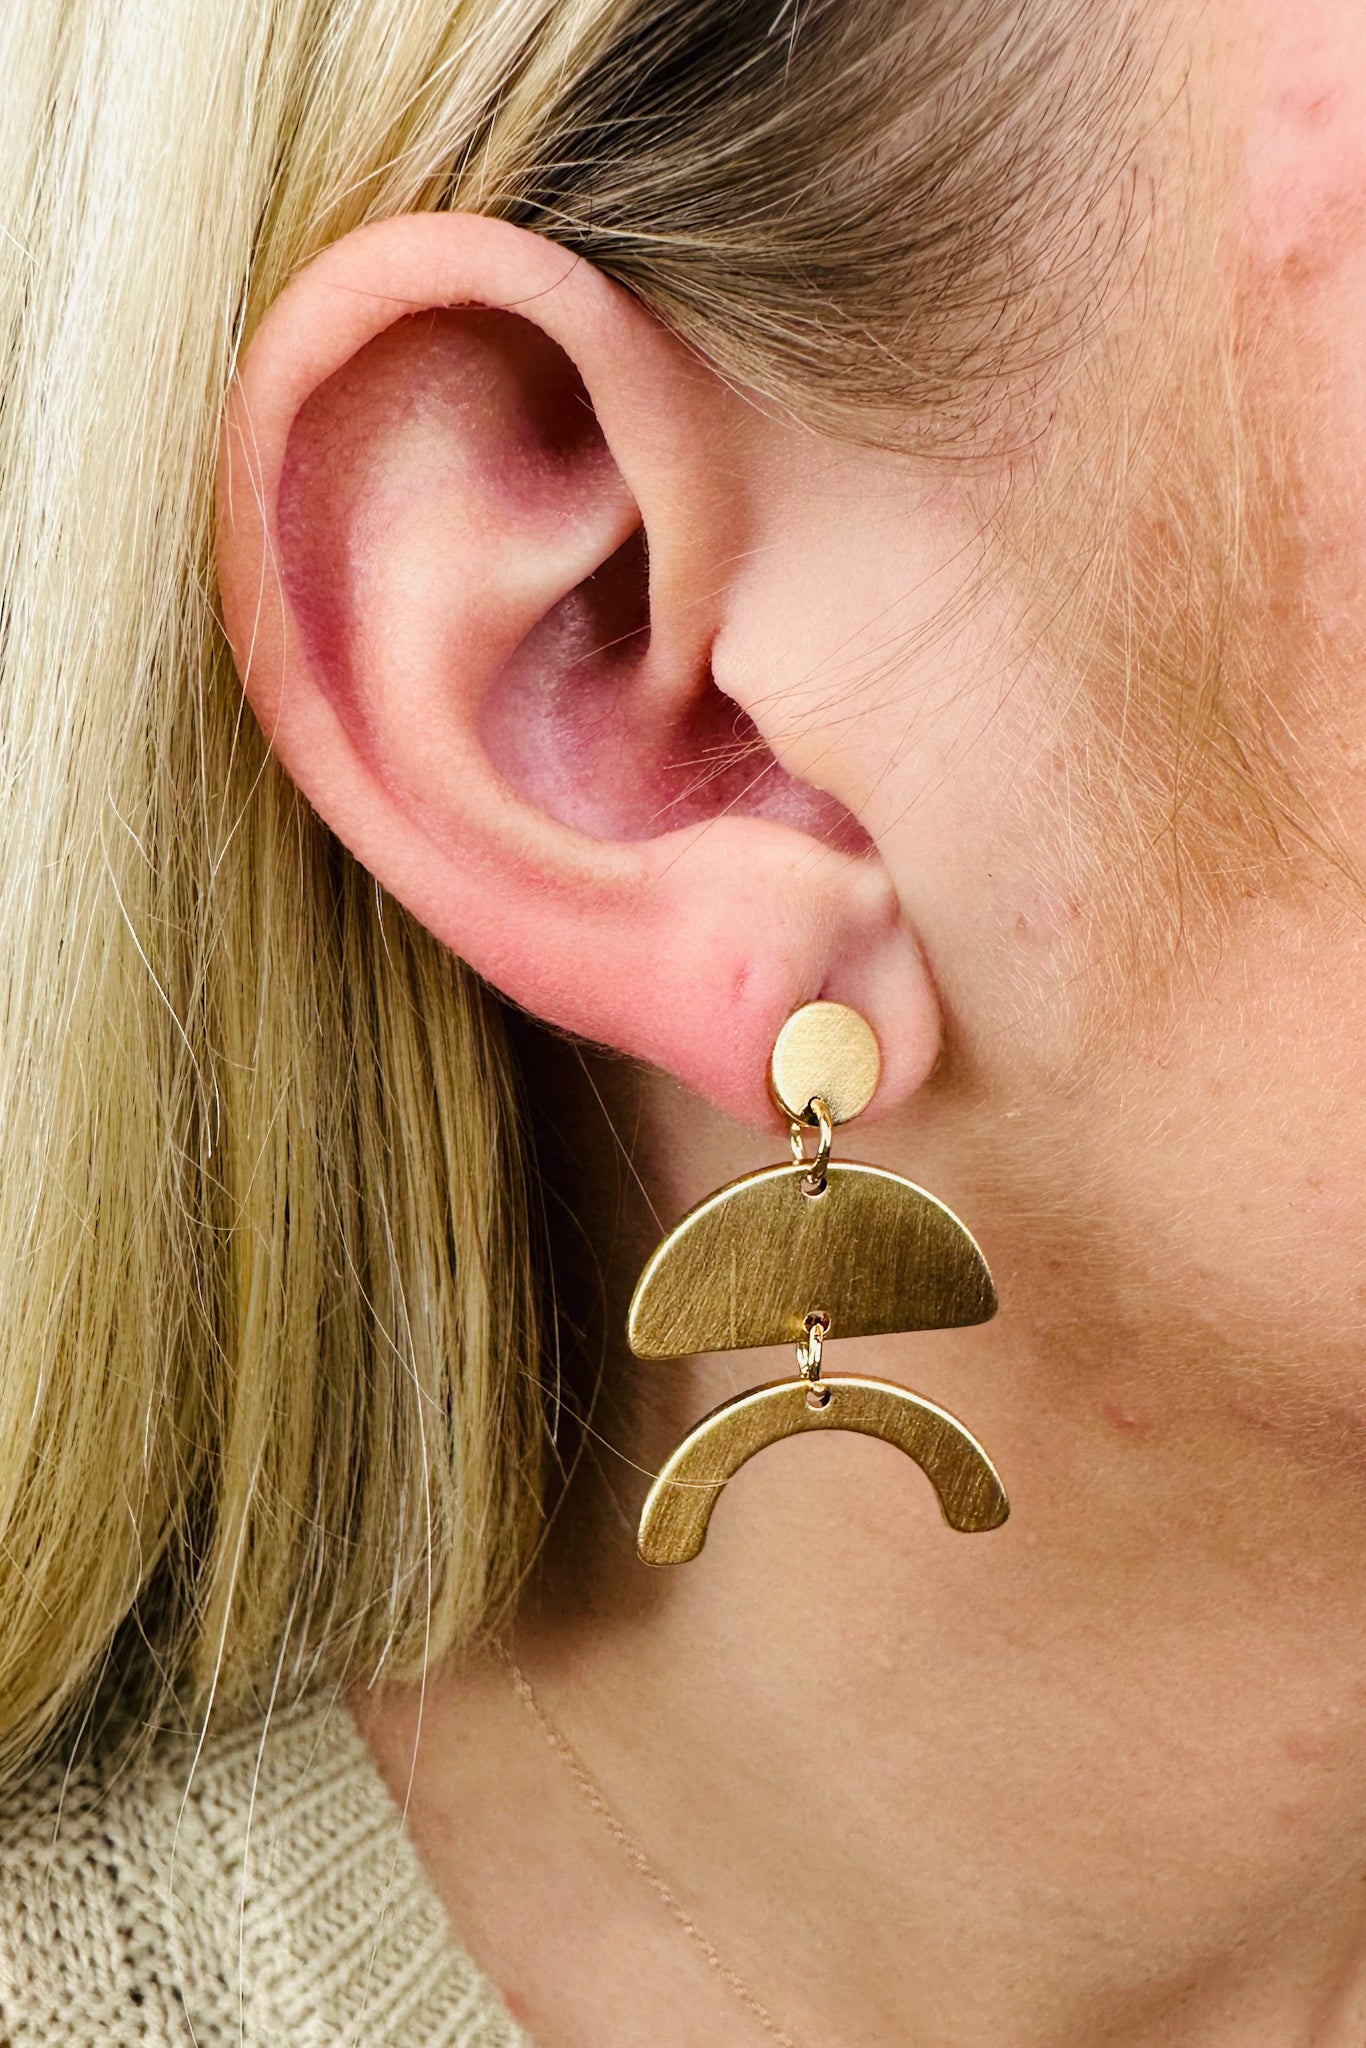 Blair Earrings by Michelle McDowell